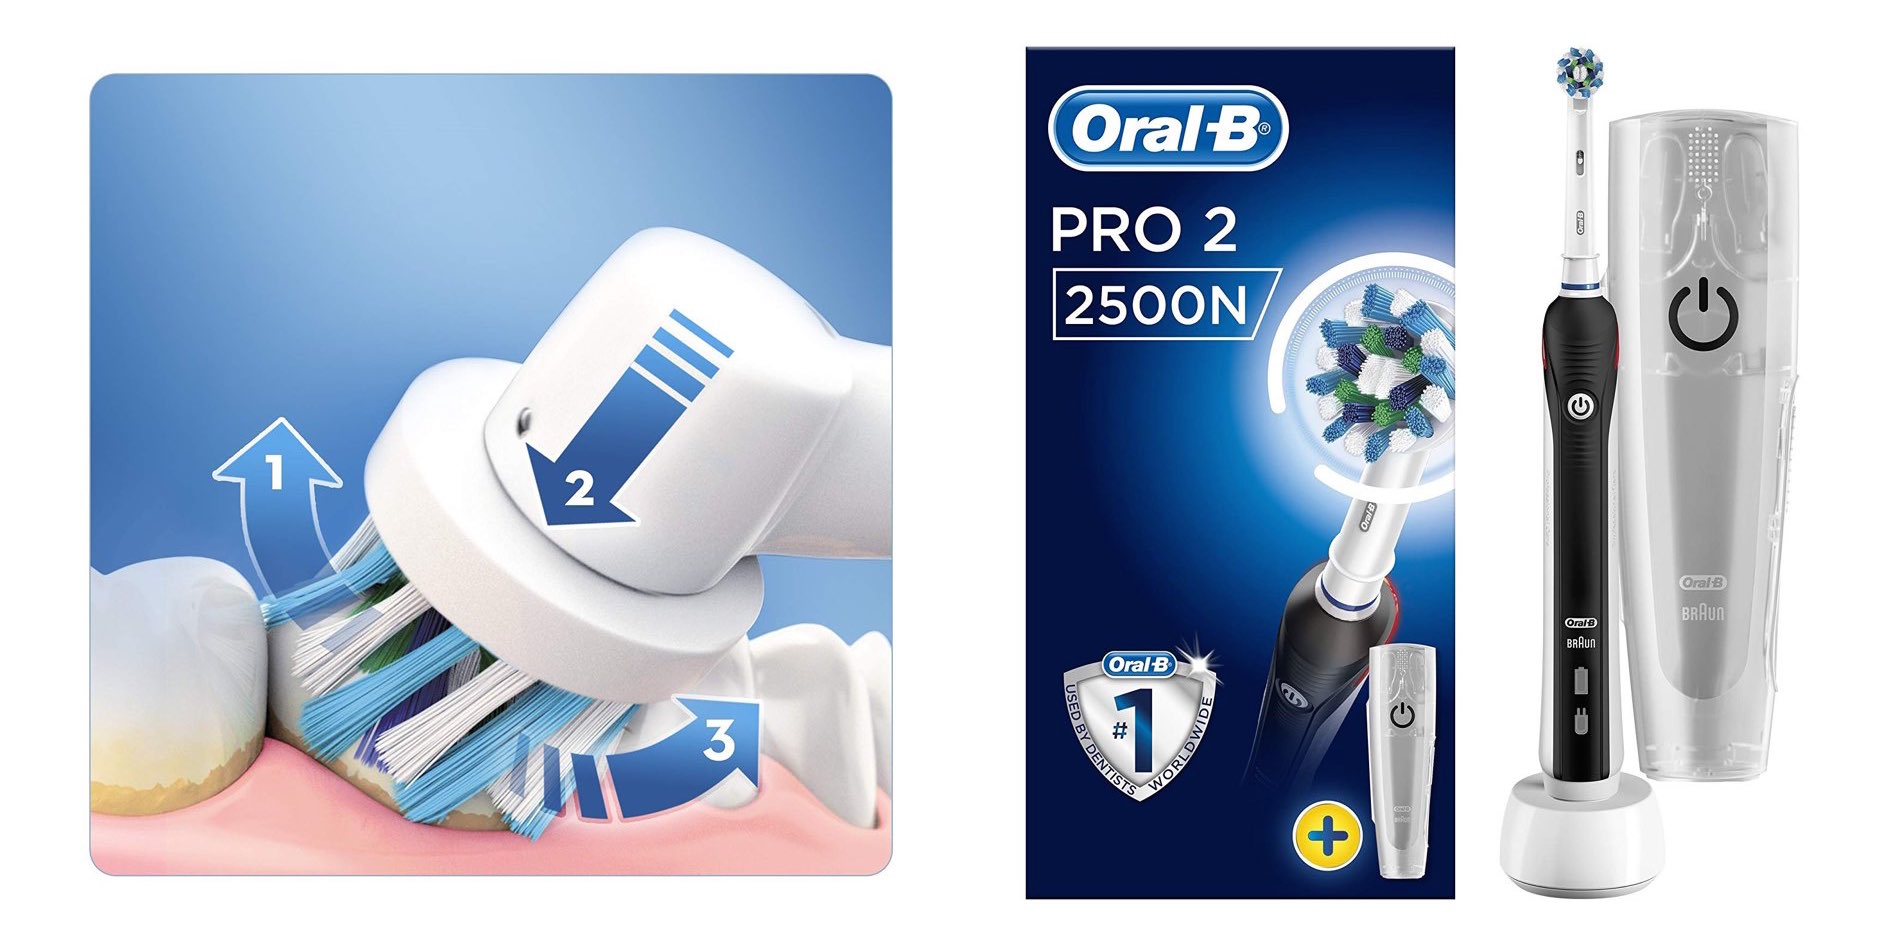 Best electric toothbrush 2019 Oral-B Pro 2 2500N